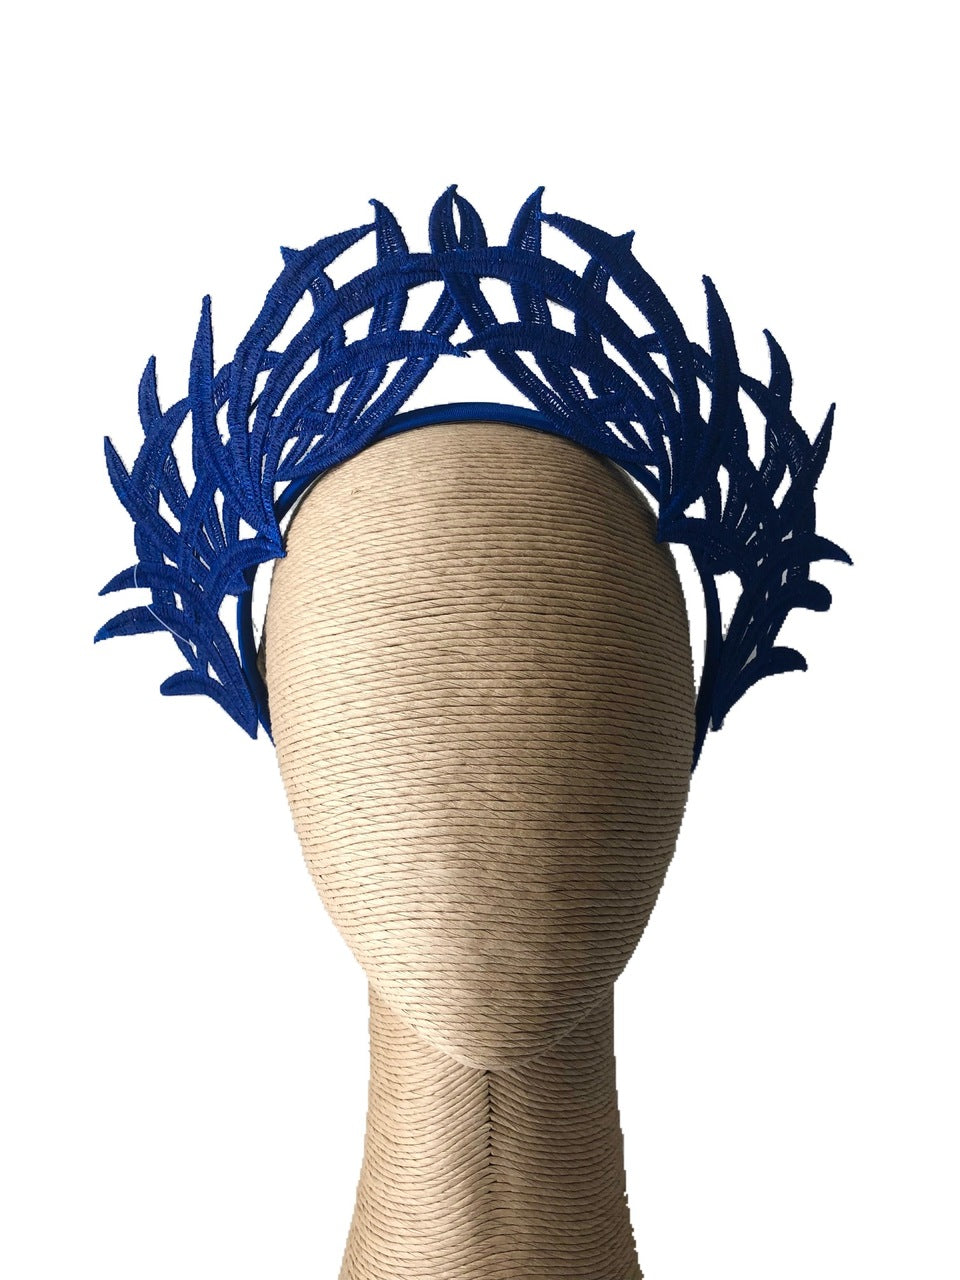 Max Alexander Cobalt Blue Lace Crown Headpiece on a Headband